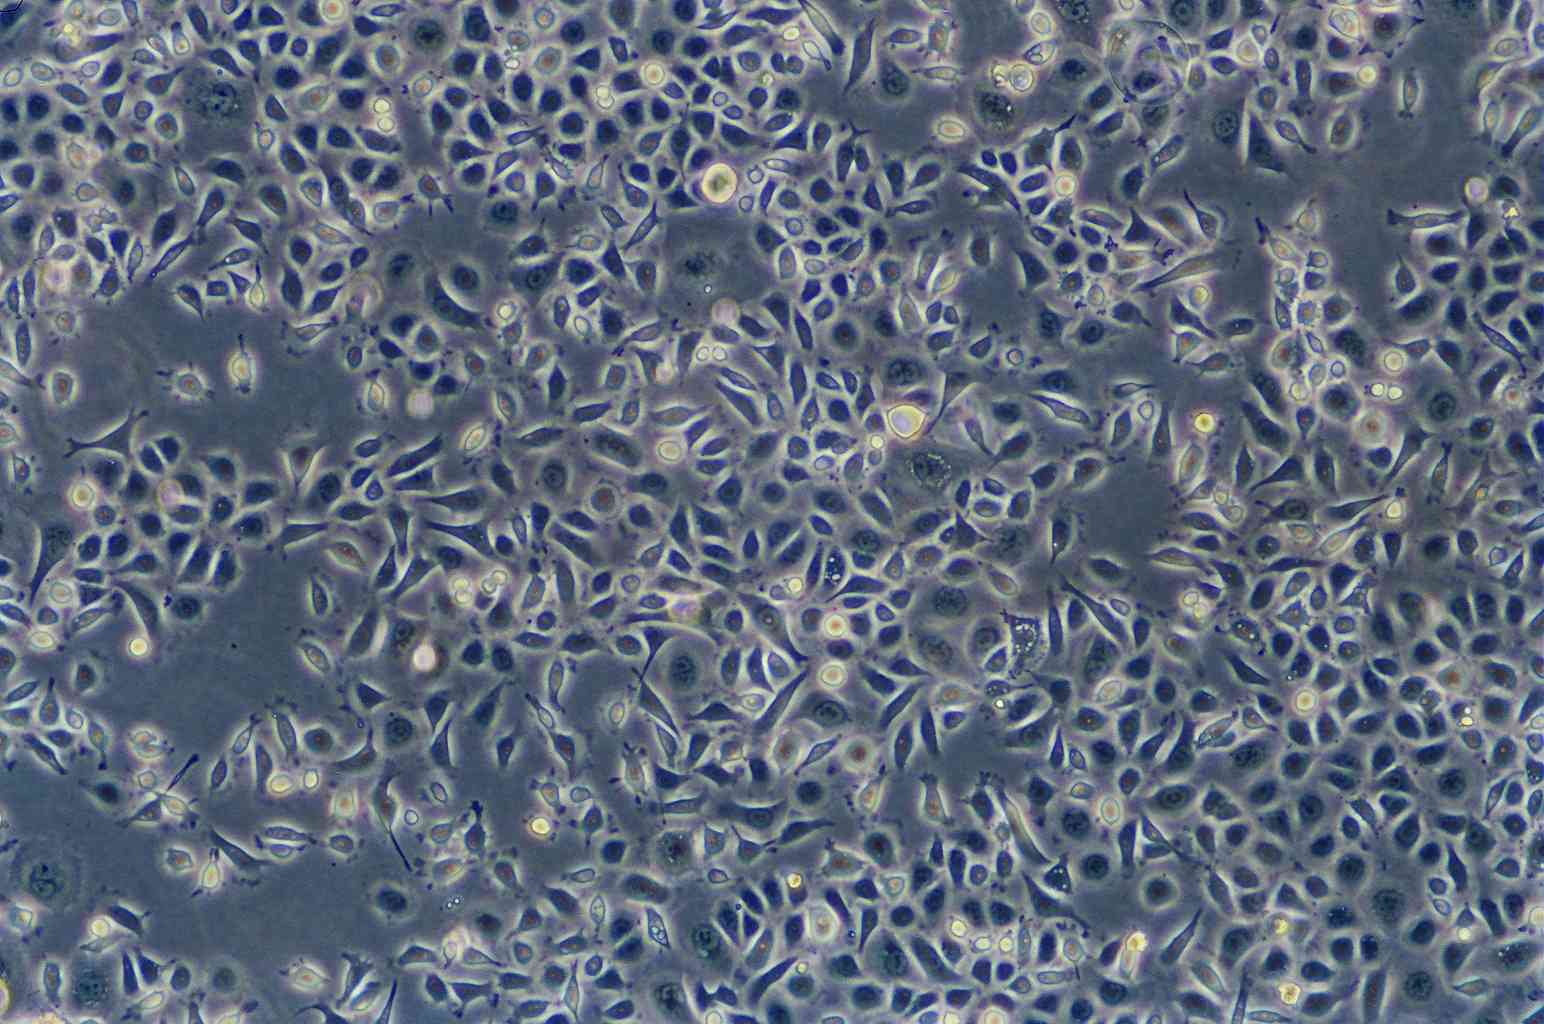 BHT101 epithelioid cells人甲状腺癌细胞系,BHT101 epithelioid cells